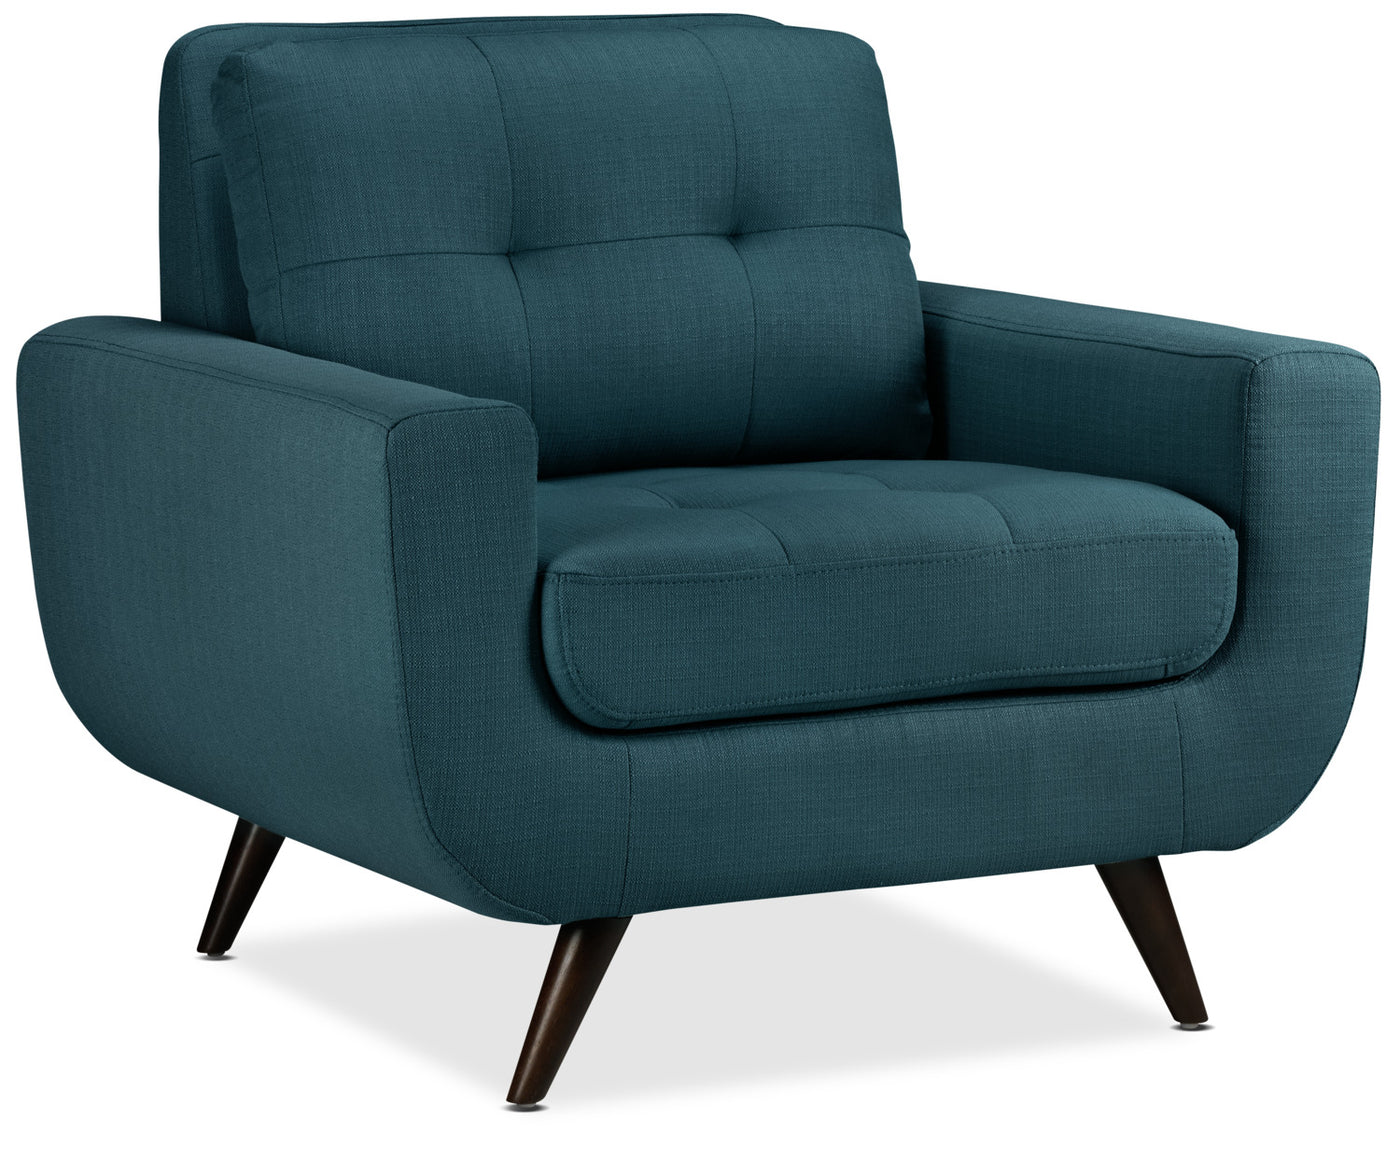 Julian Sofa, Loveseat and Chair Set - Blue